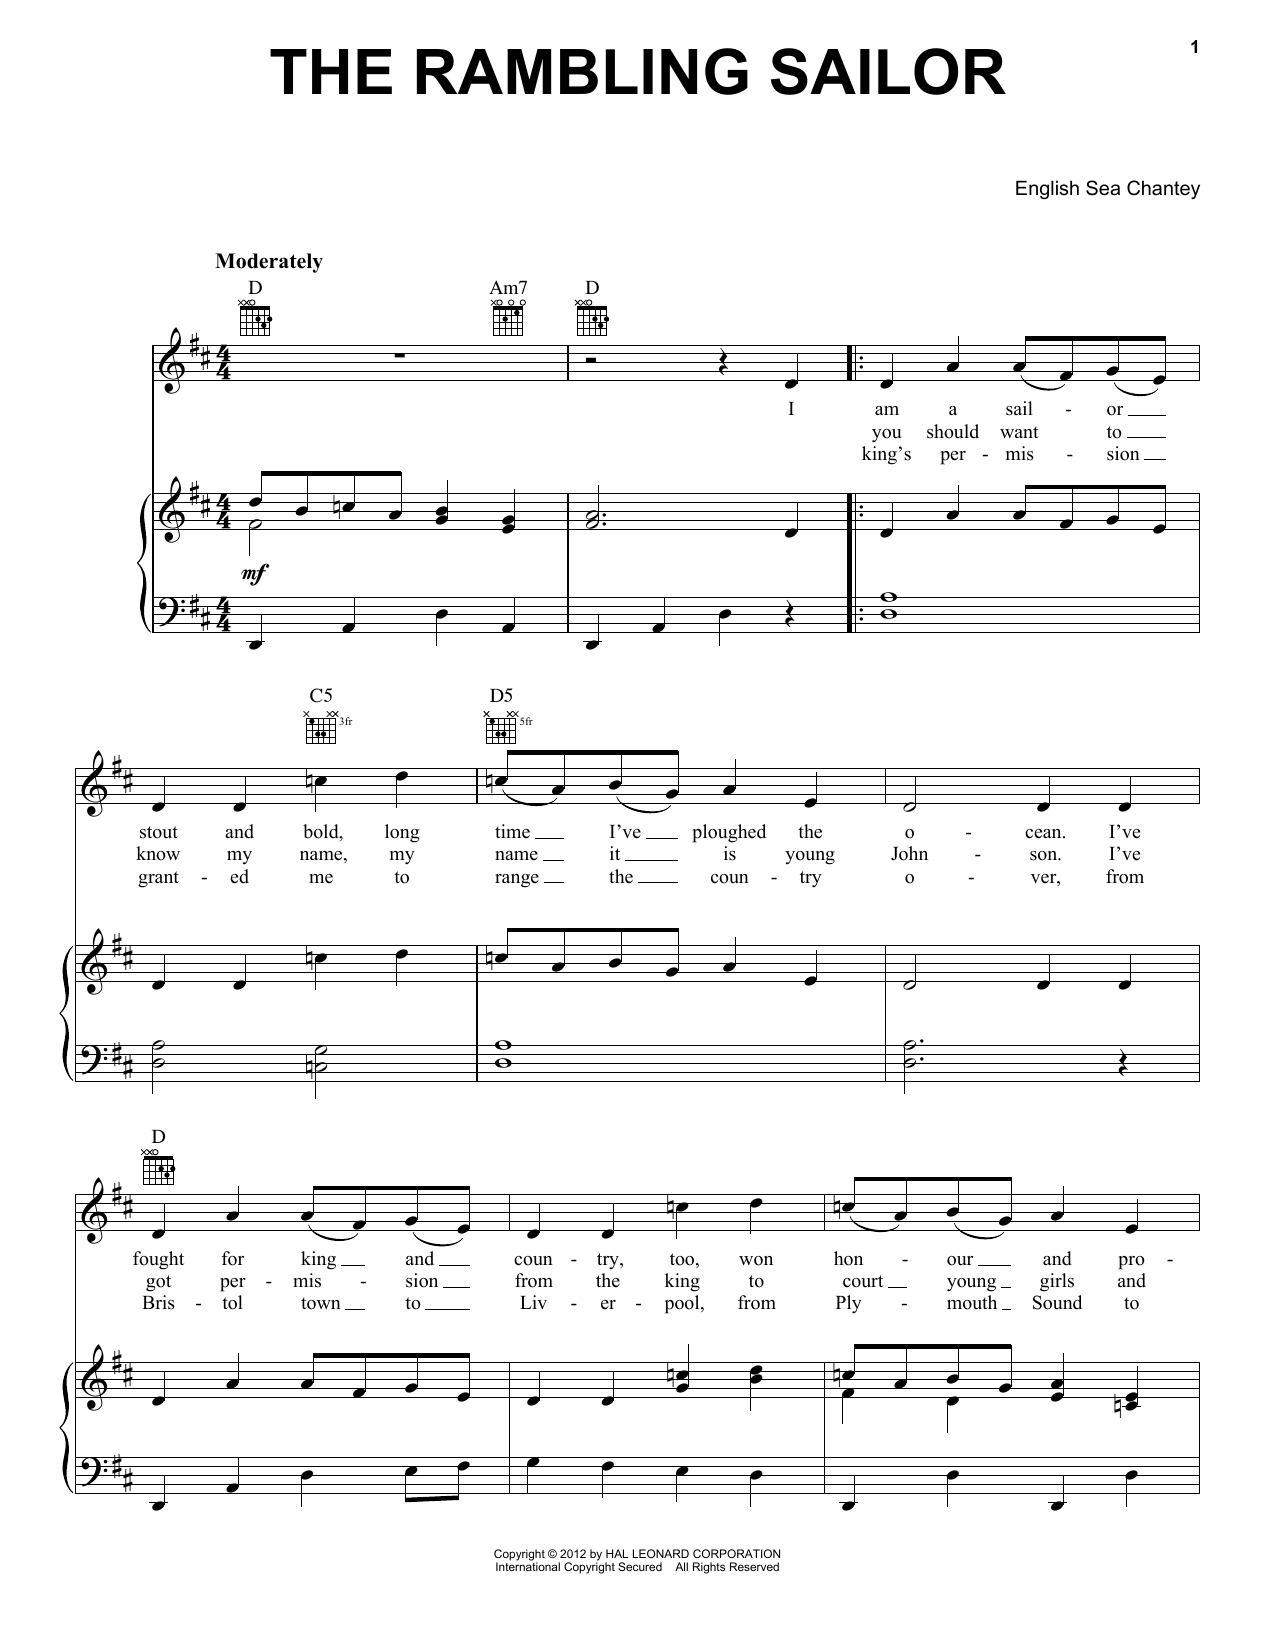 English Sea Chantey The Rambling Sailor Sheet Music Notes & Chords for Piano, Vocal & Guitar (Right-Hand Melody) - Download or Print PDF